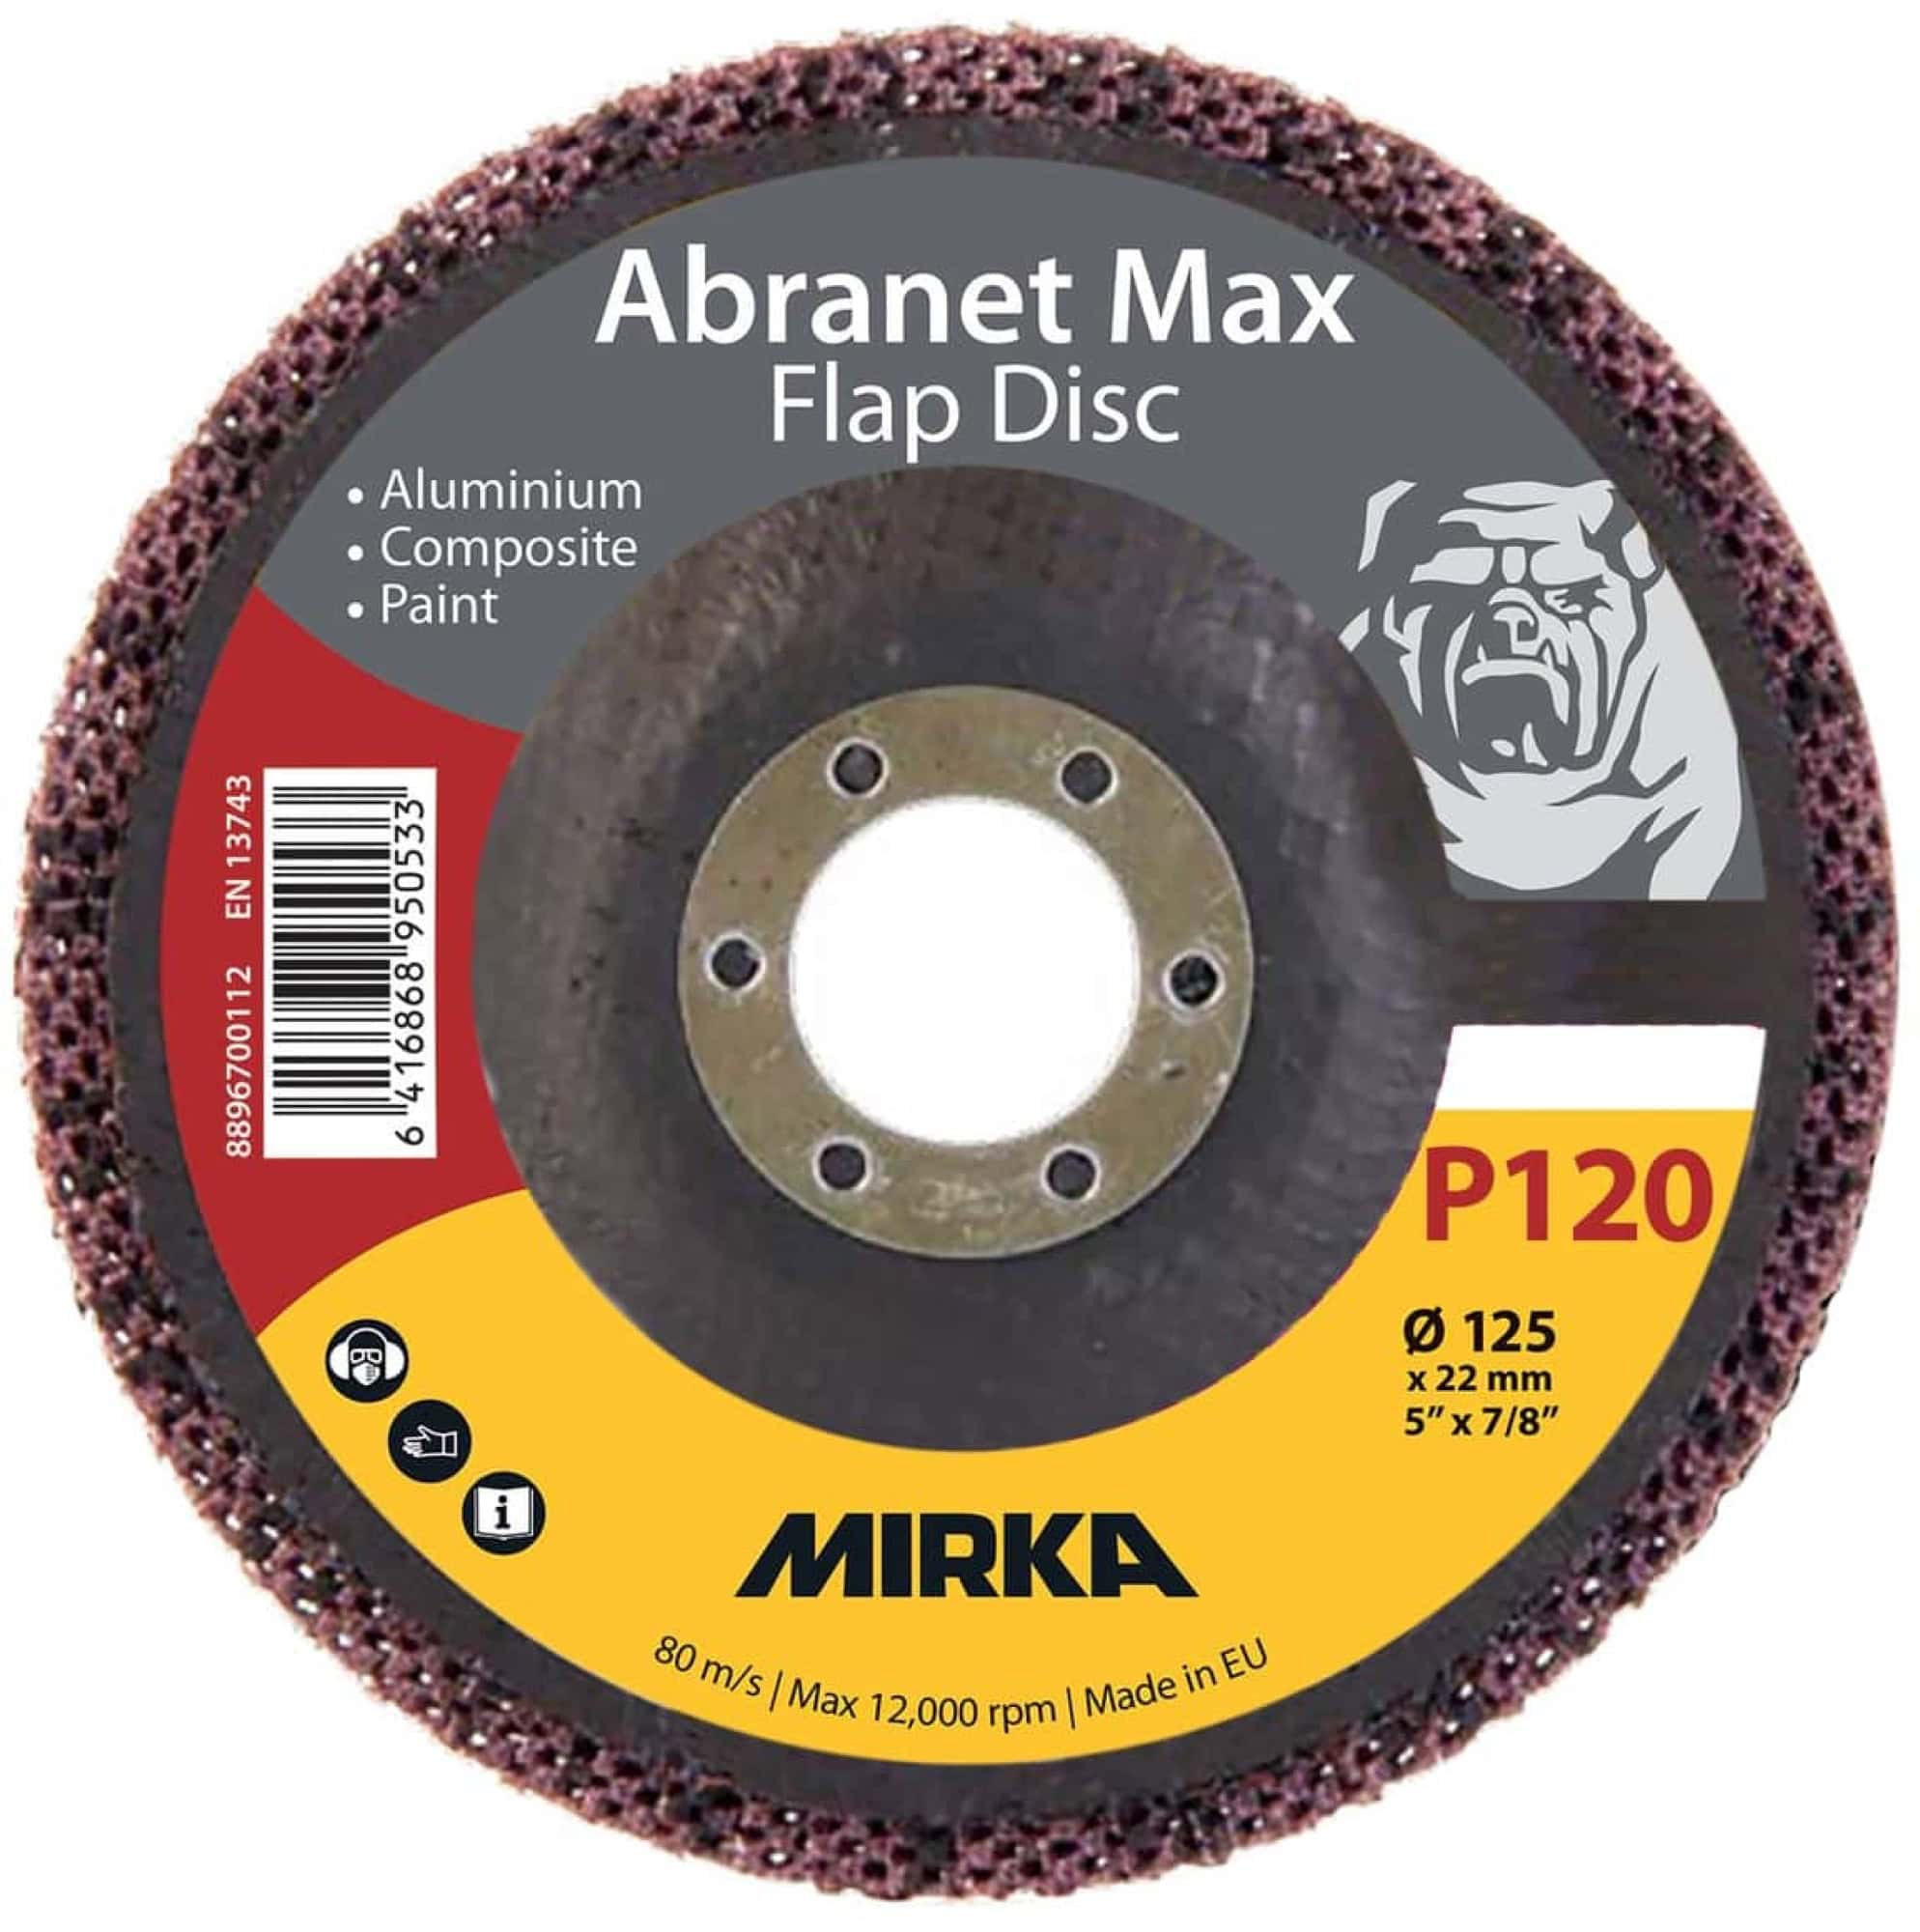 Mirka® Abranet® Max Flap Disc 8896700112, Ø 125 mm x 22 mm, P120, Fächerschleifscheibe mit Aluminiumoxidkorn